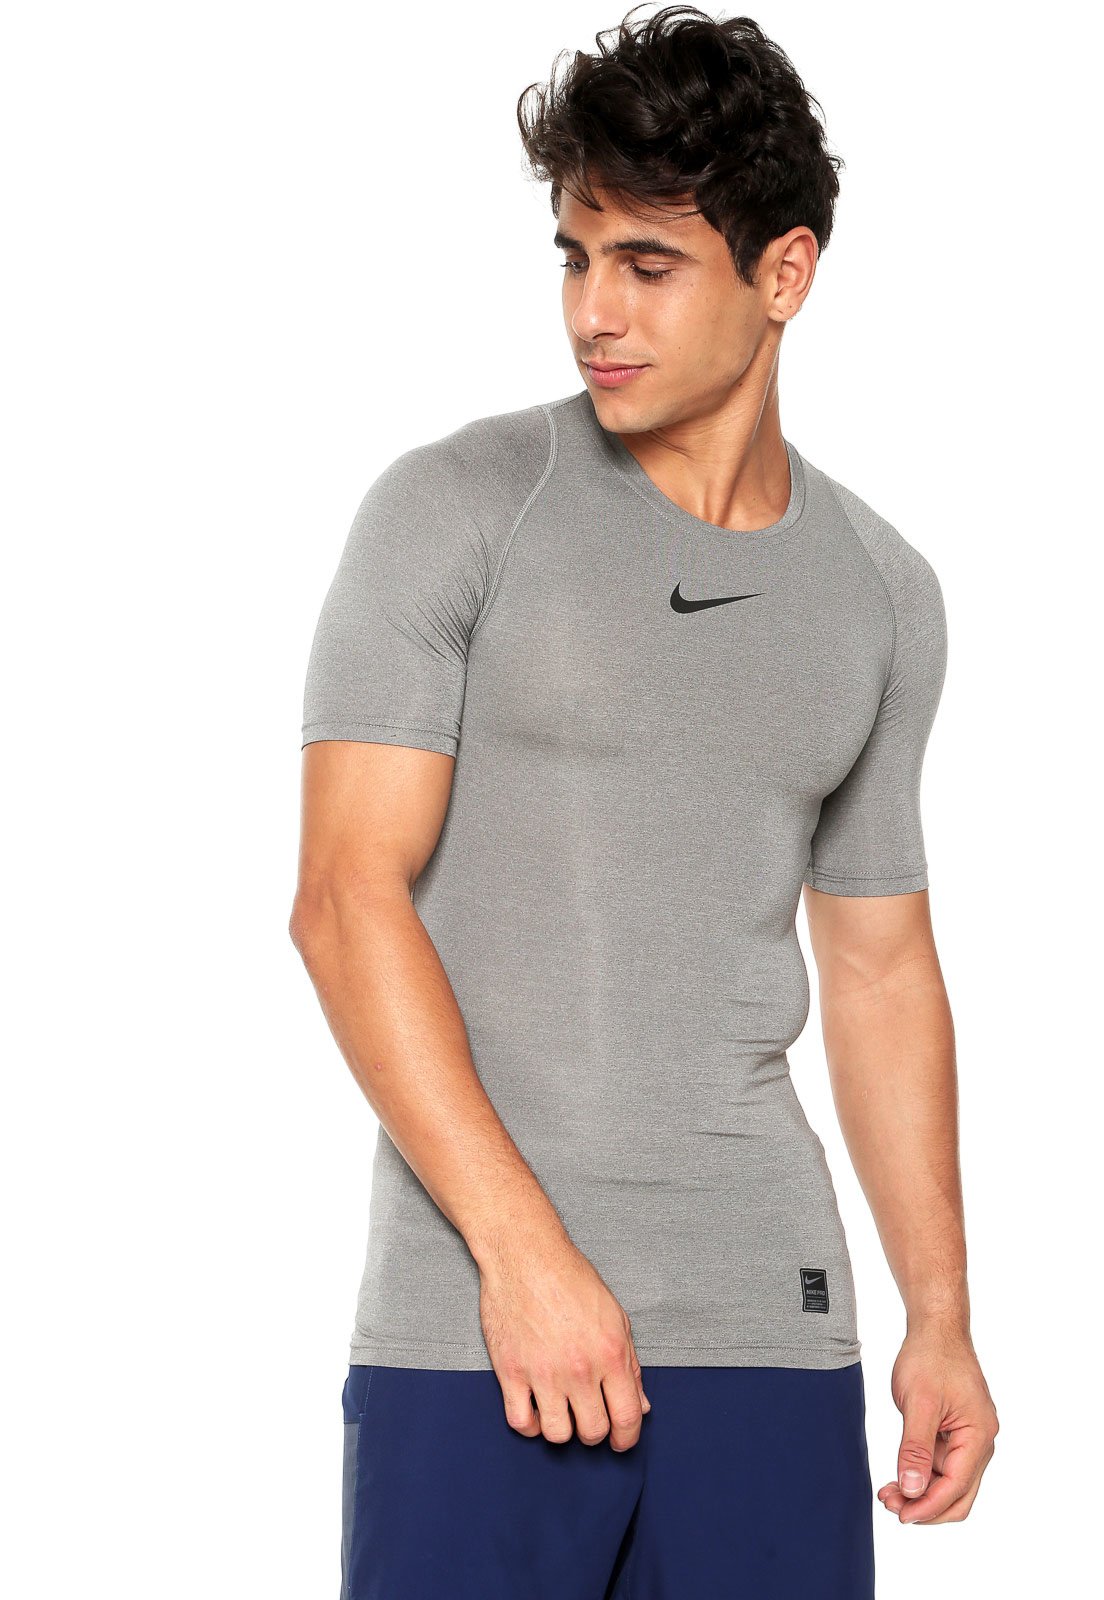 Camiseta Nike Pro Compression Cinza - Compre Agora